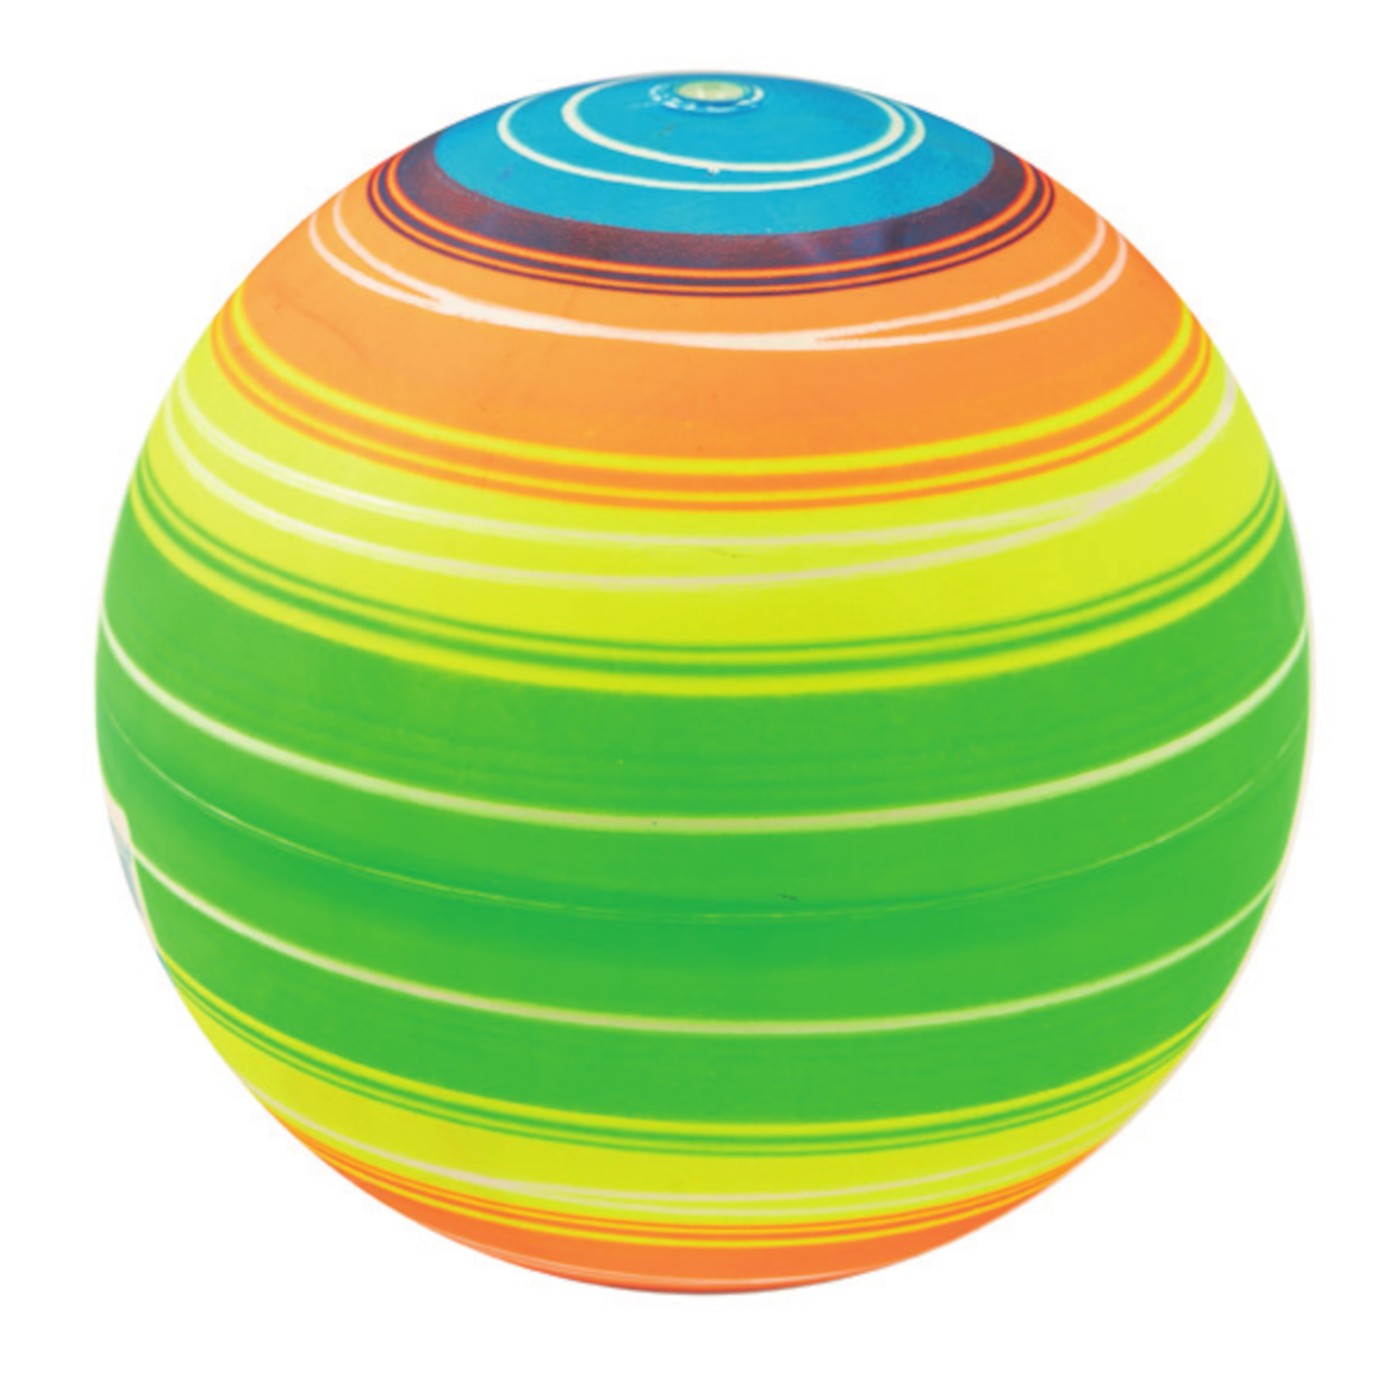 balon-decorado-rainbow